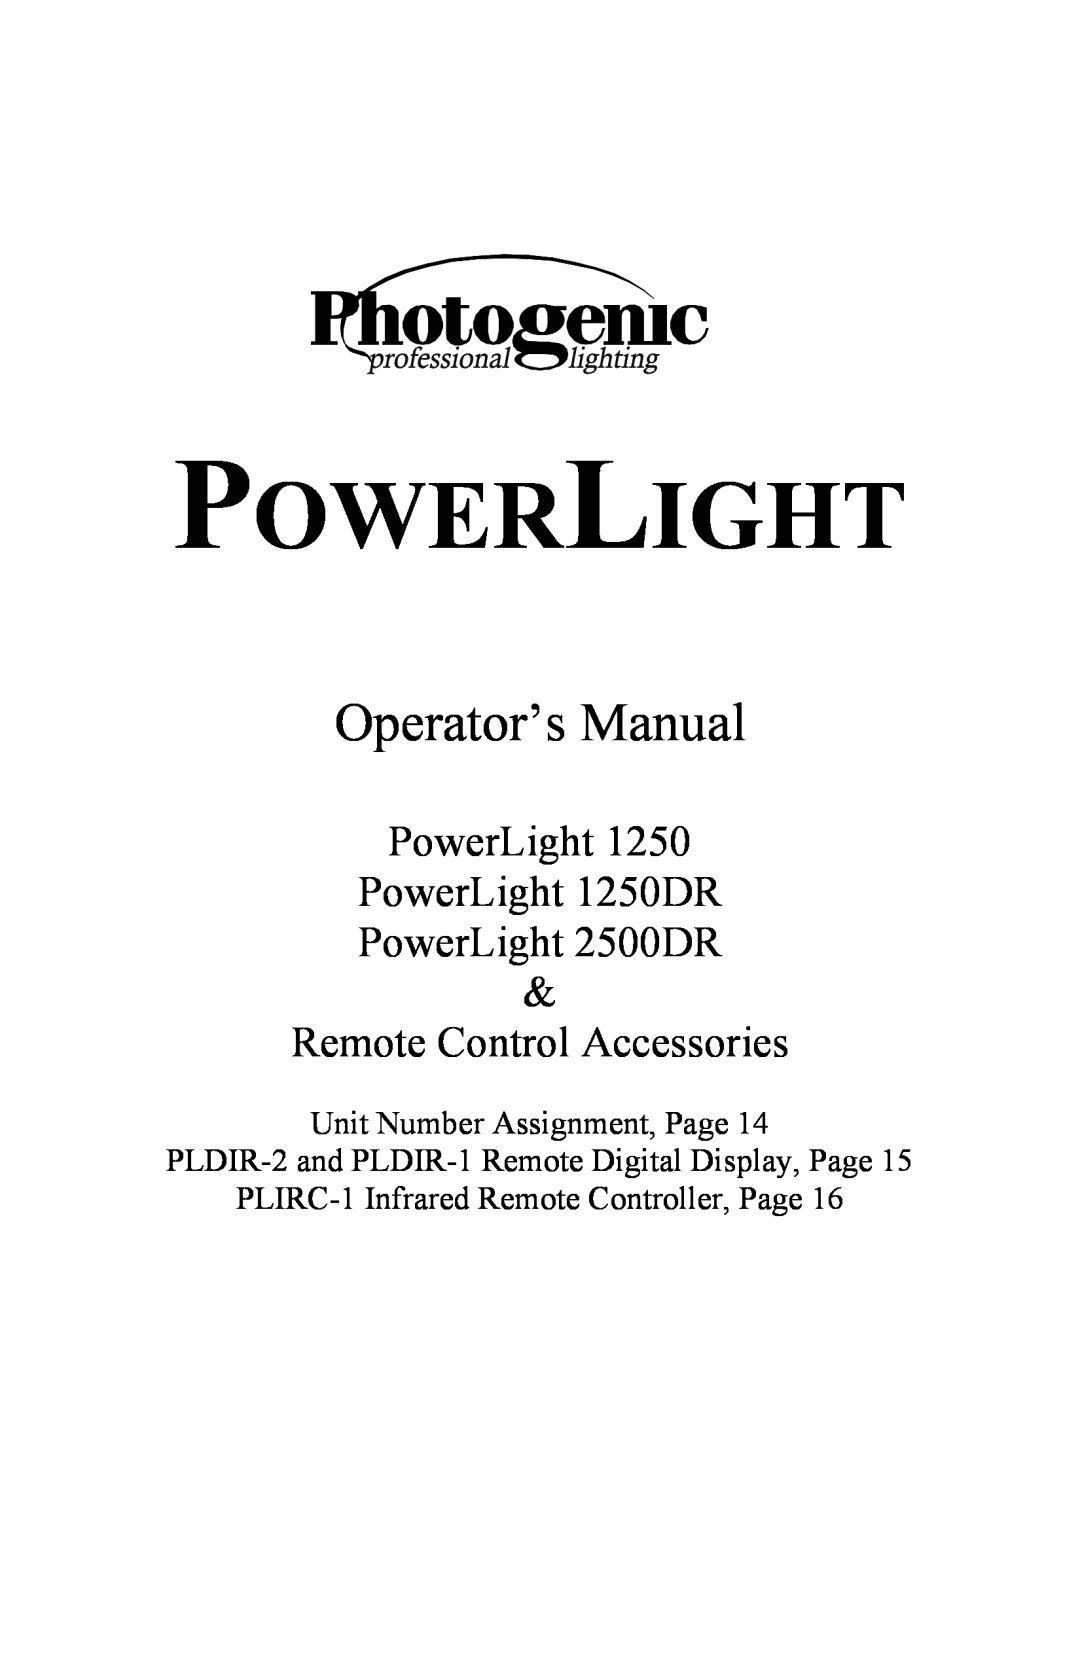 Photogenic Professional Lighting manual PowerLight PowerLight 1250DR PowerLight 2500DR, Remote Control Accessories 